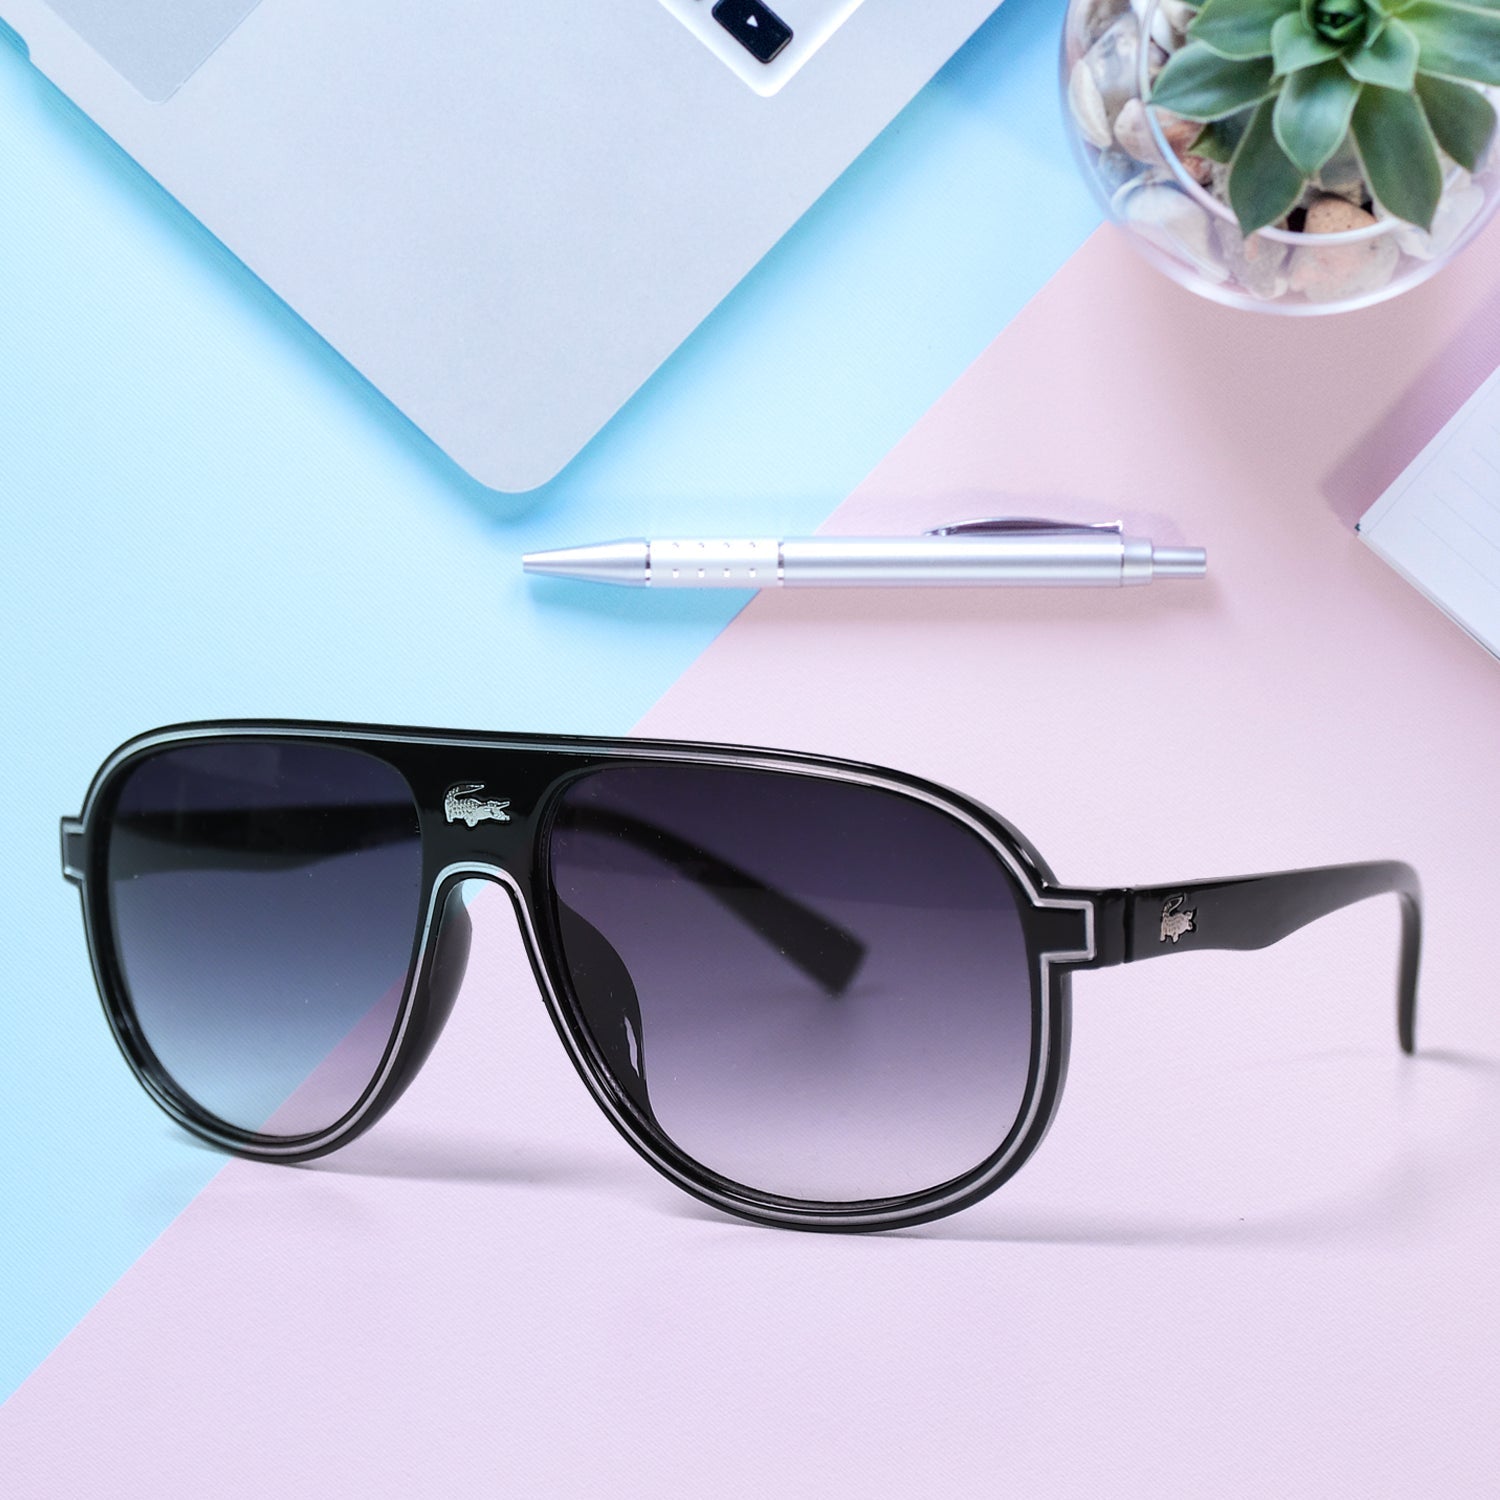 1181 Fashion Sunglasses Full Rim Wayfarer Branded Latest and Stylish Sunglasses | Polarized and 100% UV Protected | Men Sunglasses 